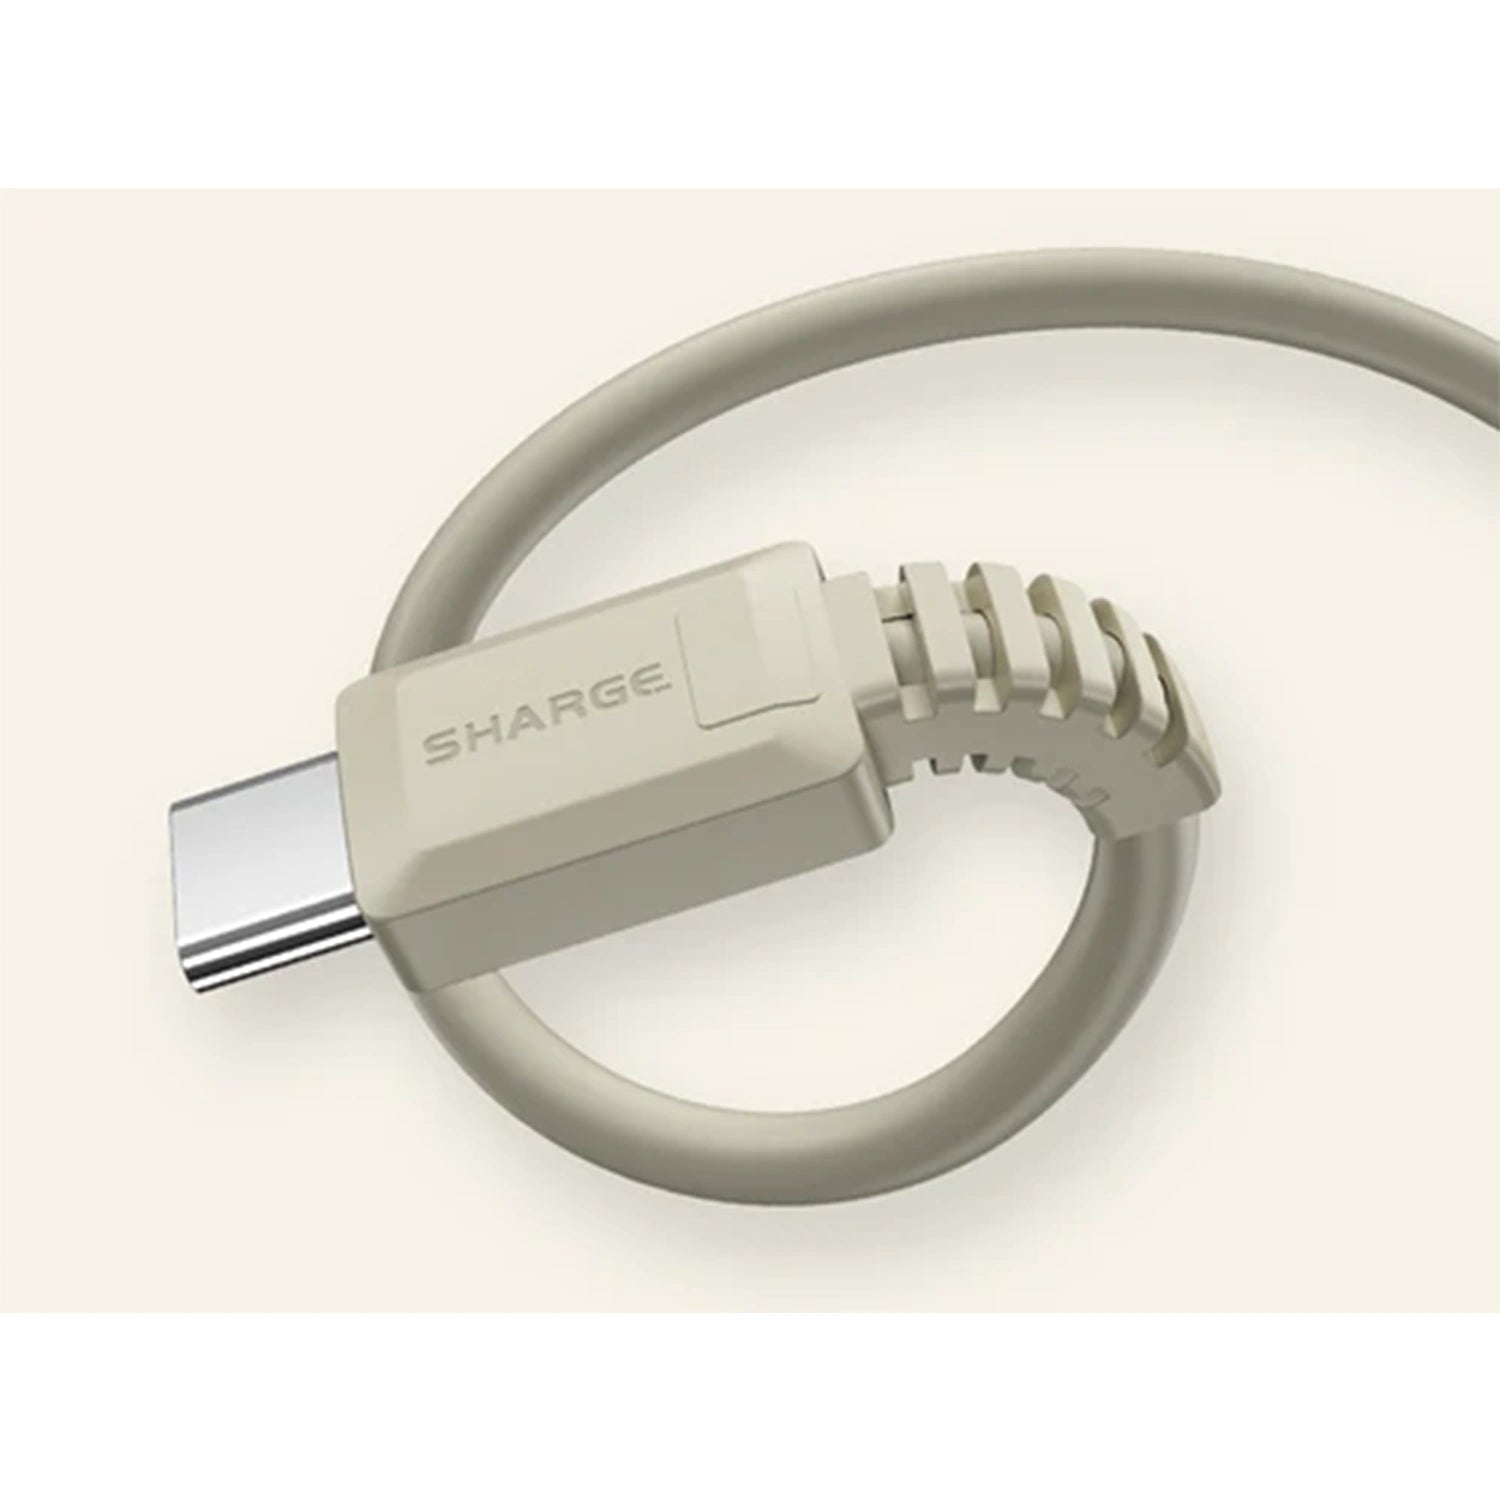 Shargeek SL109 Retro MFI USB-C to Lightning  Cable 1.2m, Retro White